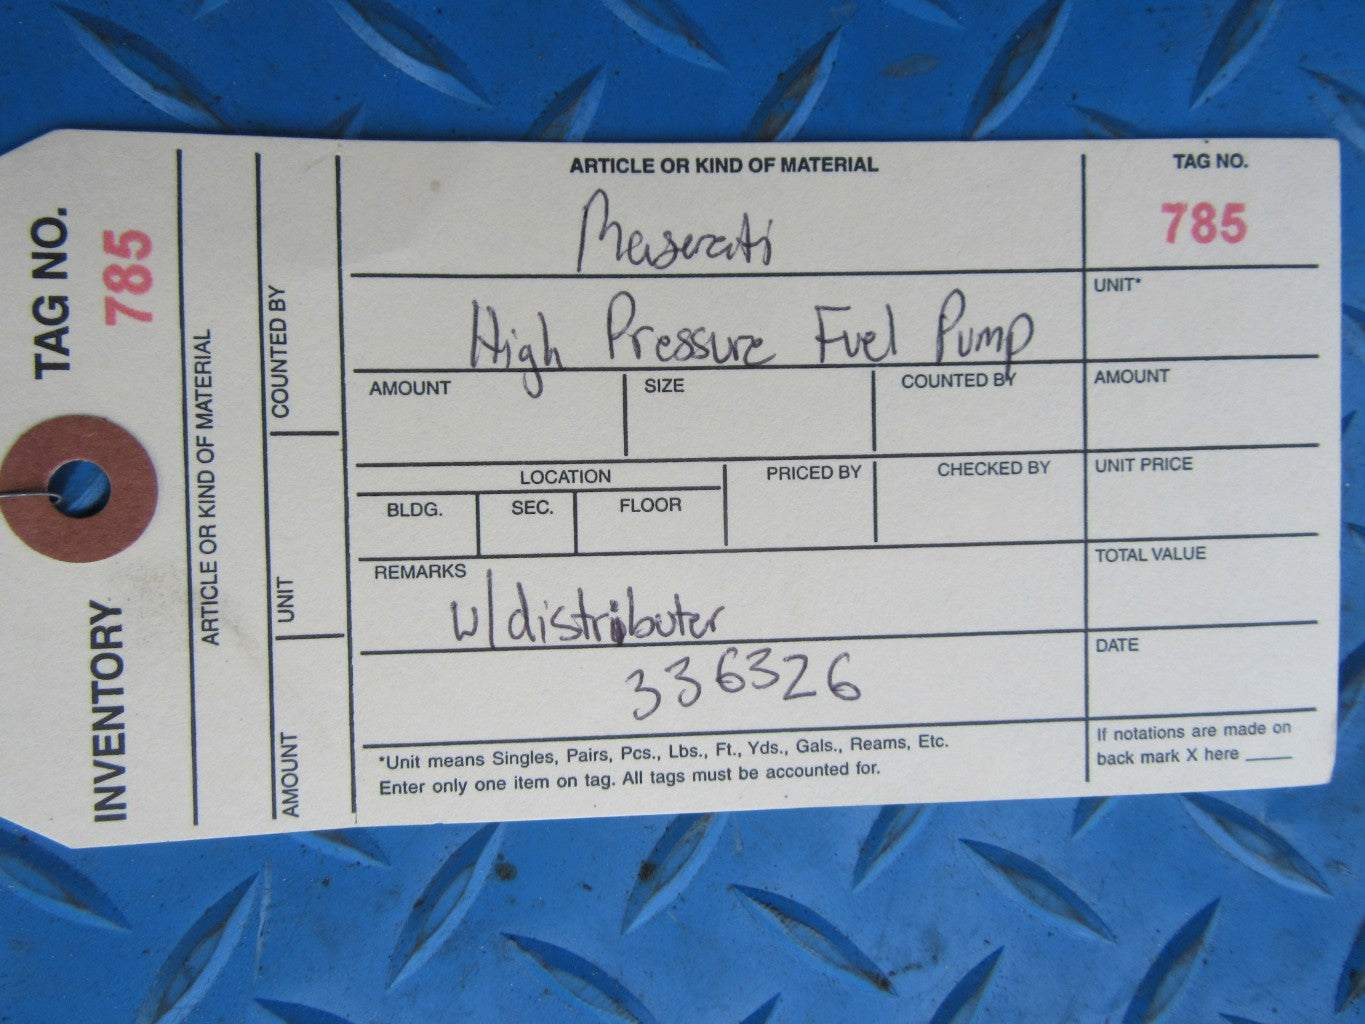 Maserati Ghibli Quattroporte fuel injector rail high pressure fuel pump #0785